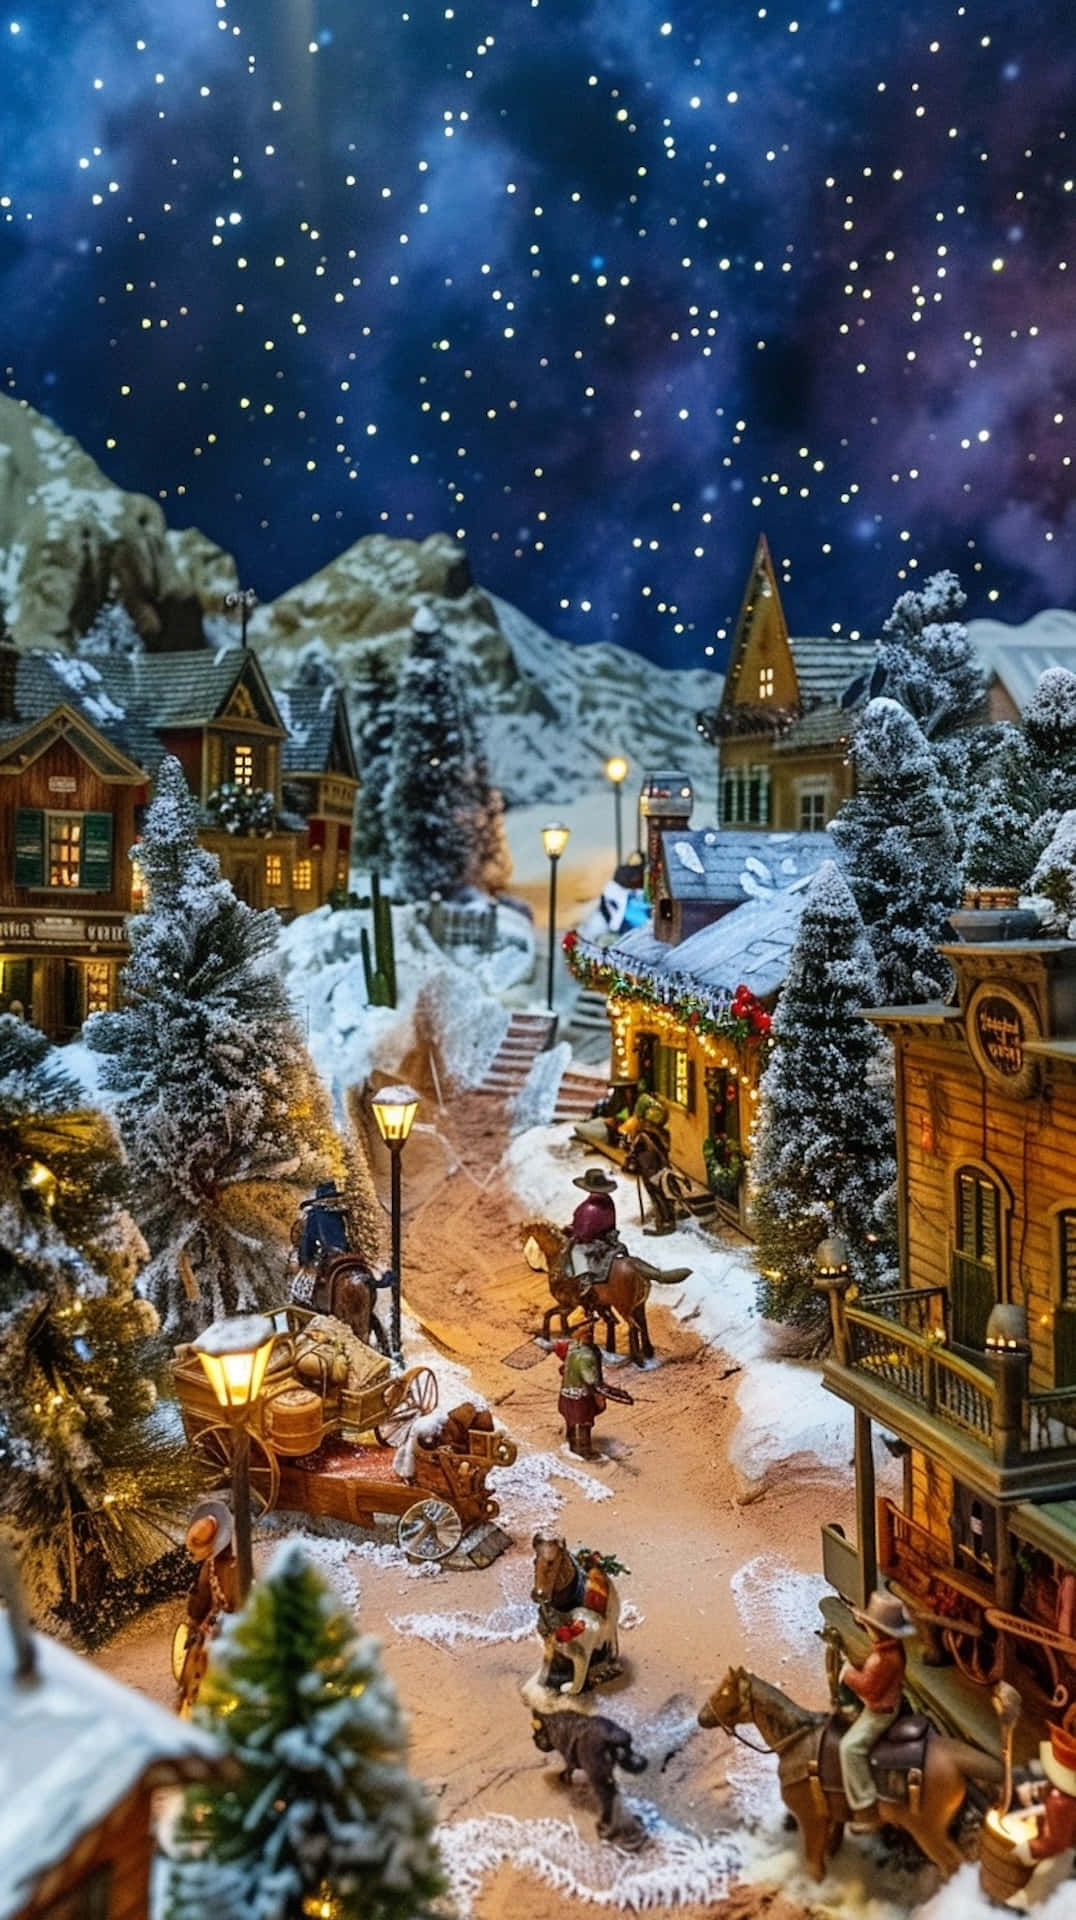 Enchanted Christmas Village Night Scene Wallpaper